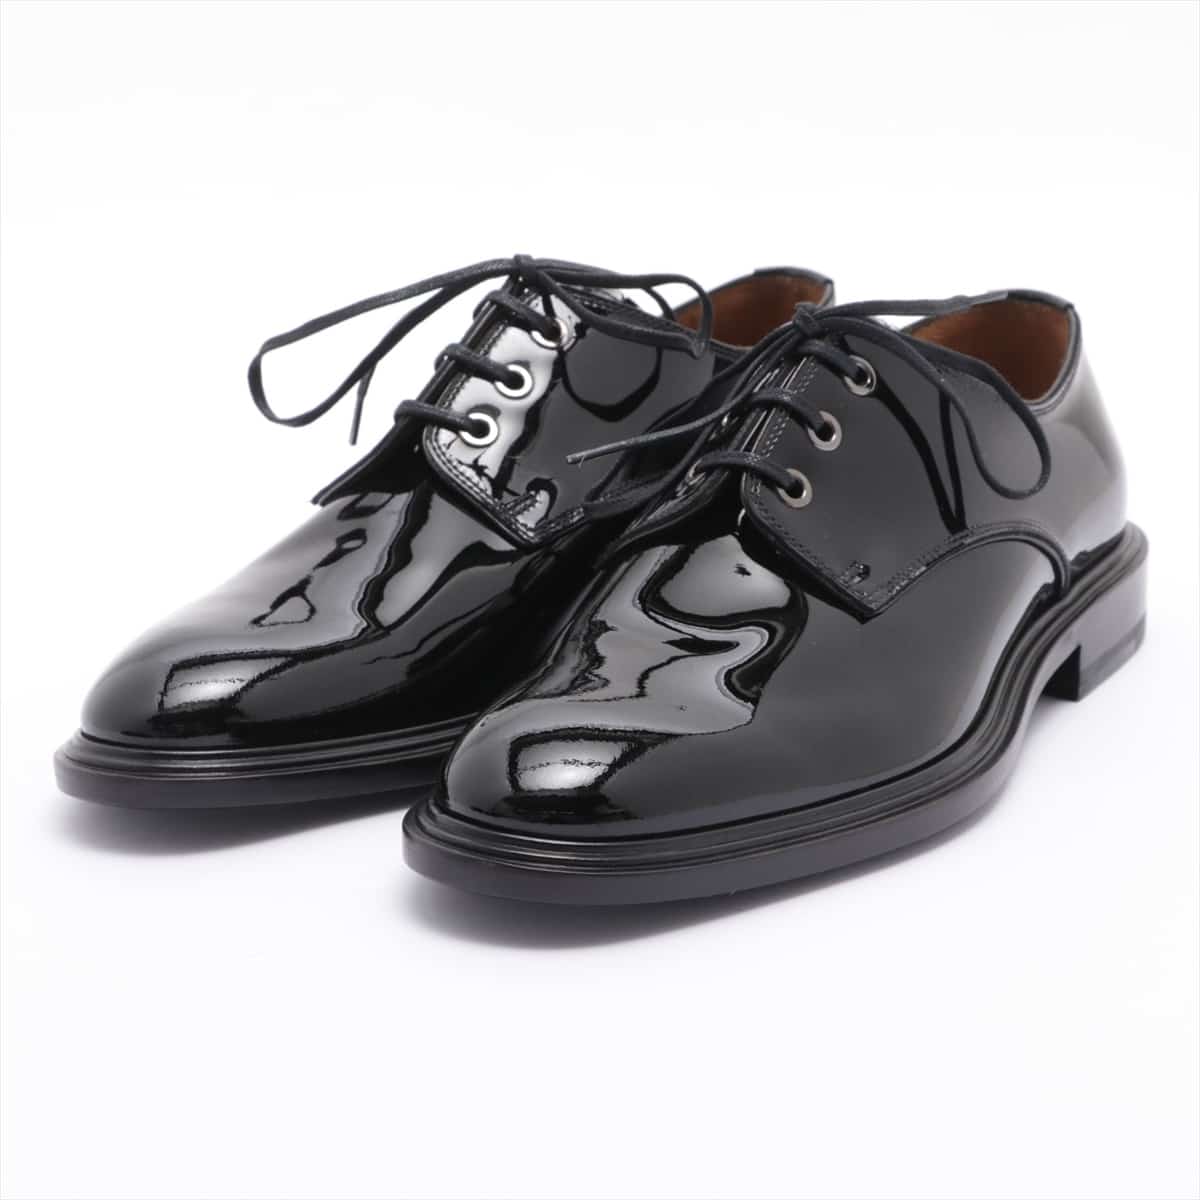 Givenchy Patent leather Leather shoes 40 Men's Black BM08050